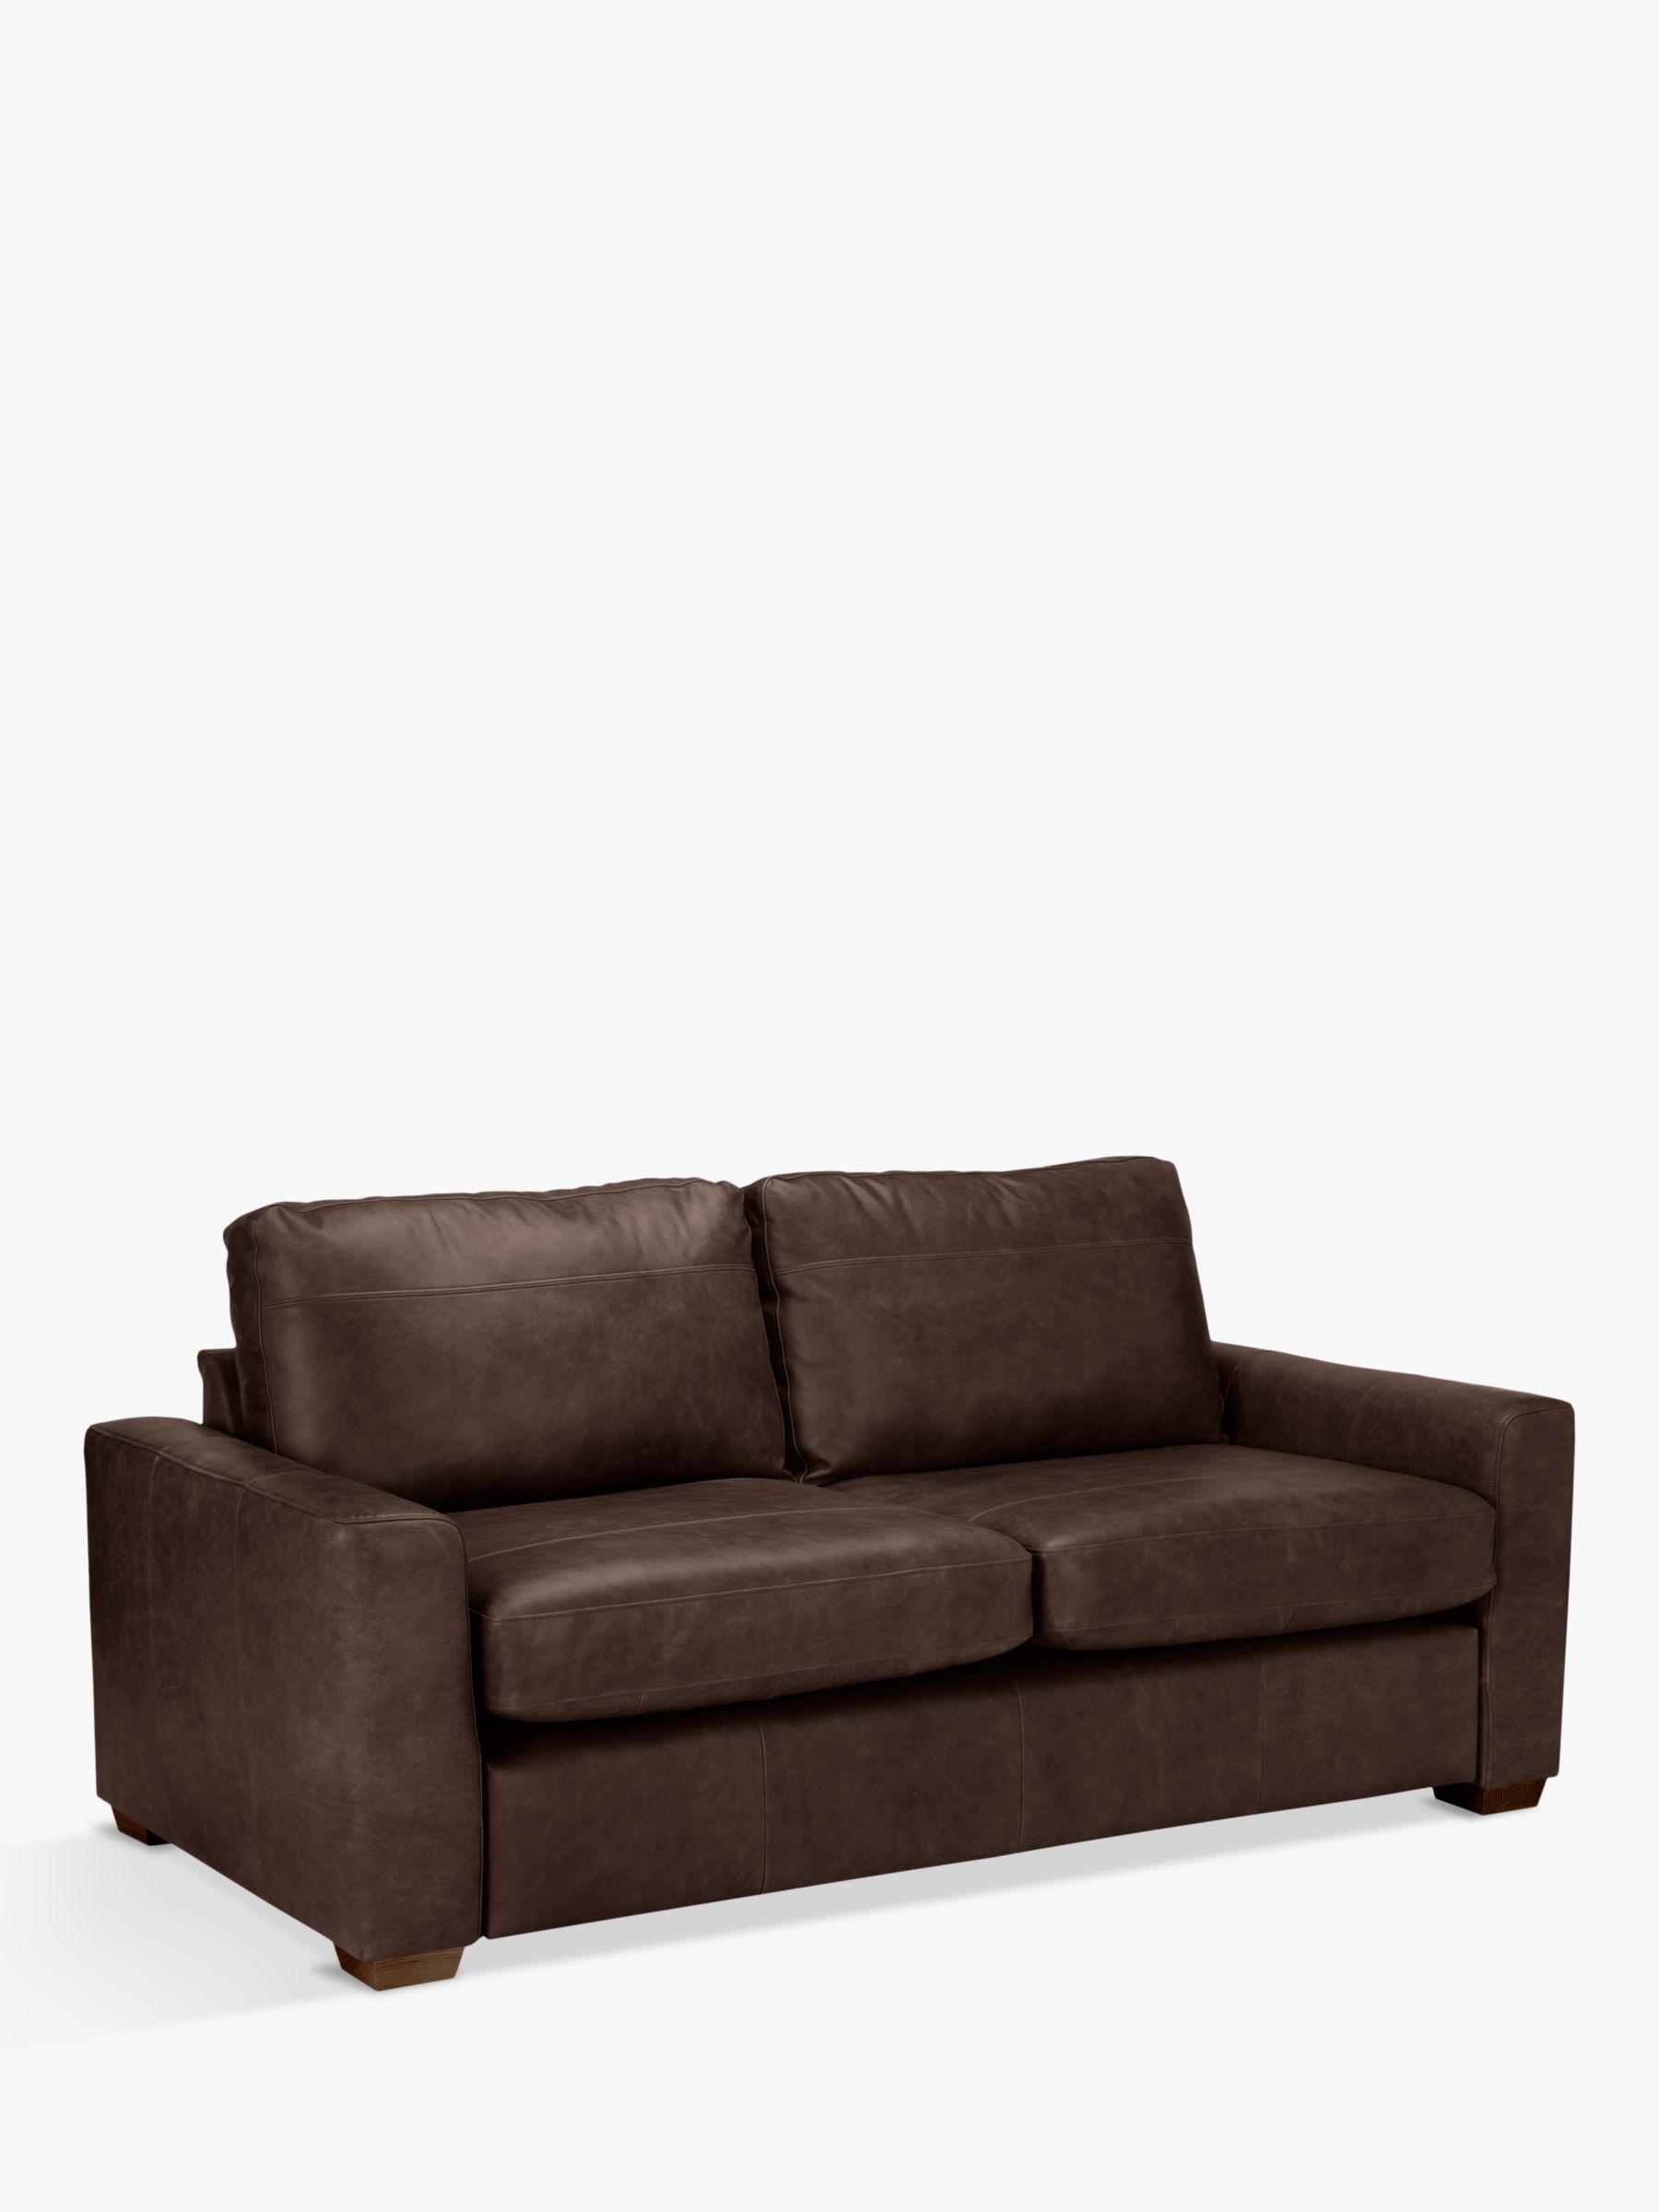 Oliver Range, John Lewis Oliver Large 3 Seater Leather Sofa, Dark Leg, Contempo Dark Chocolate